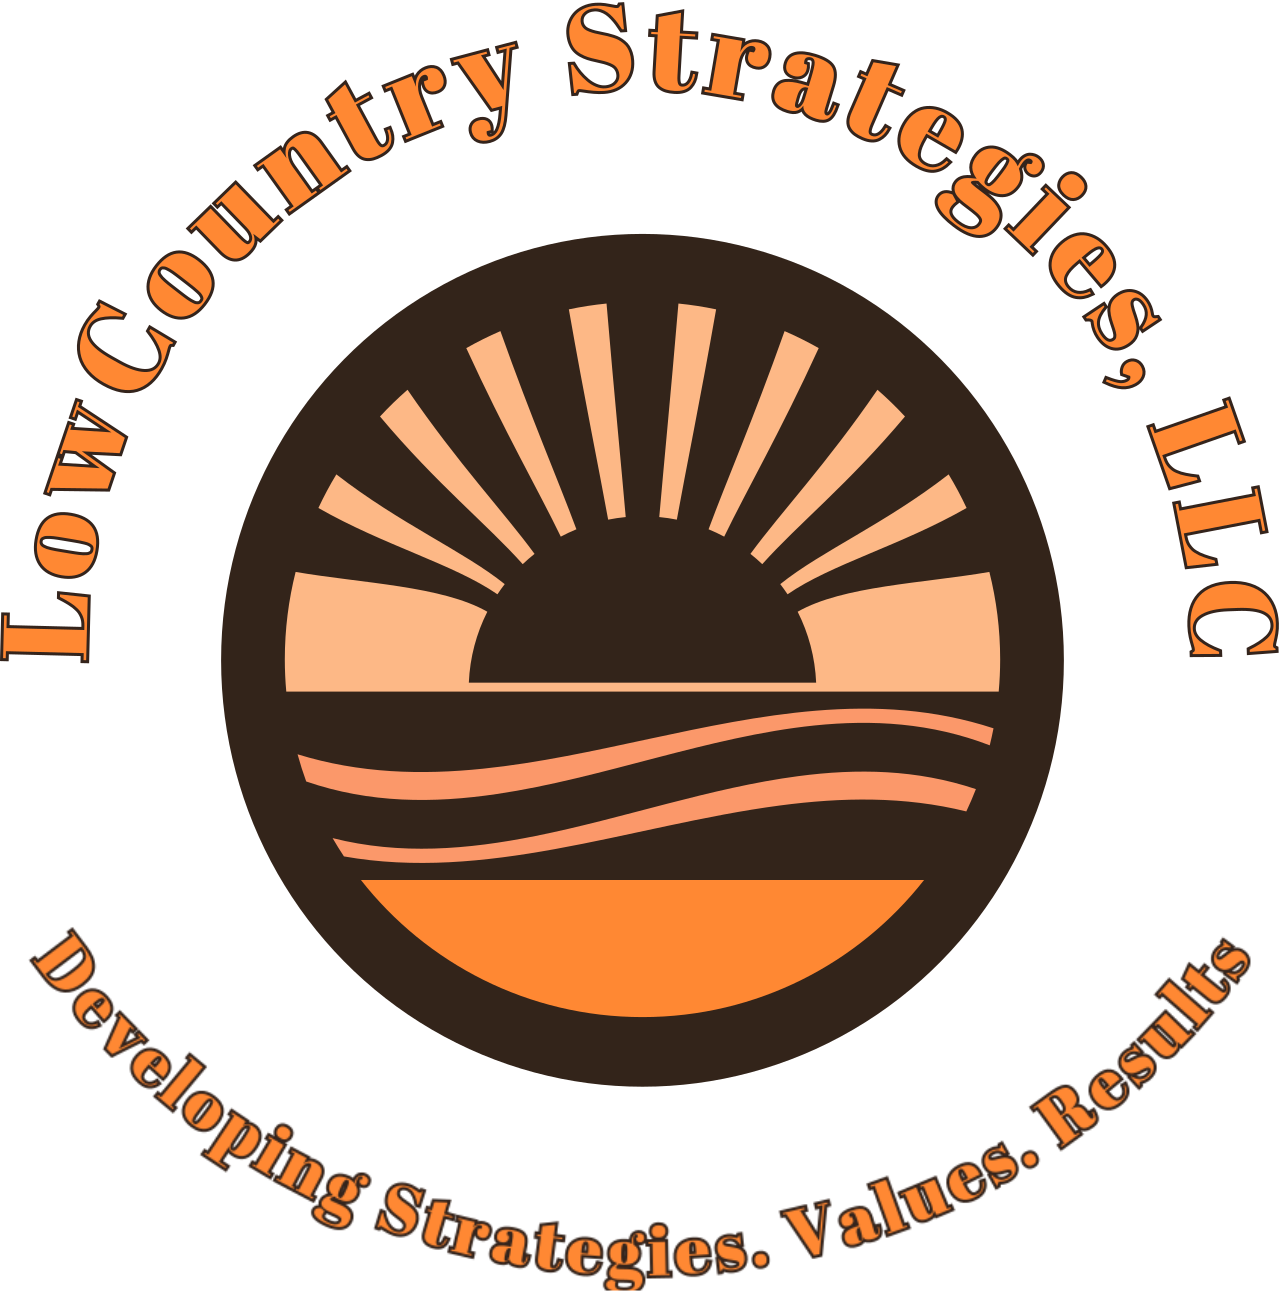 LowCountry Strategies, LLC's web page